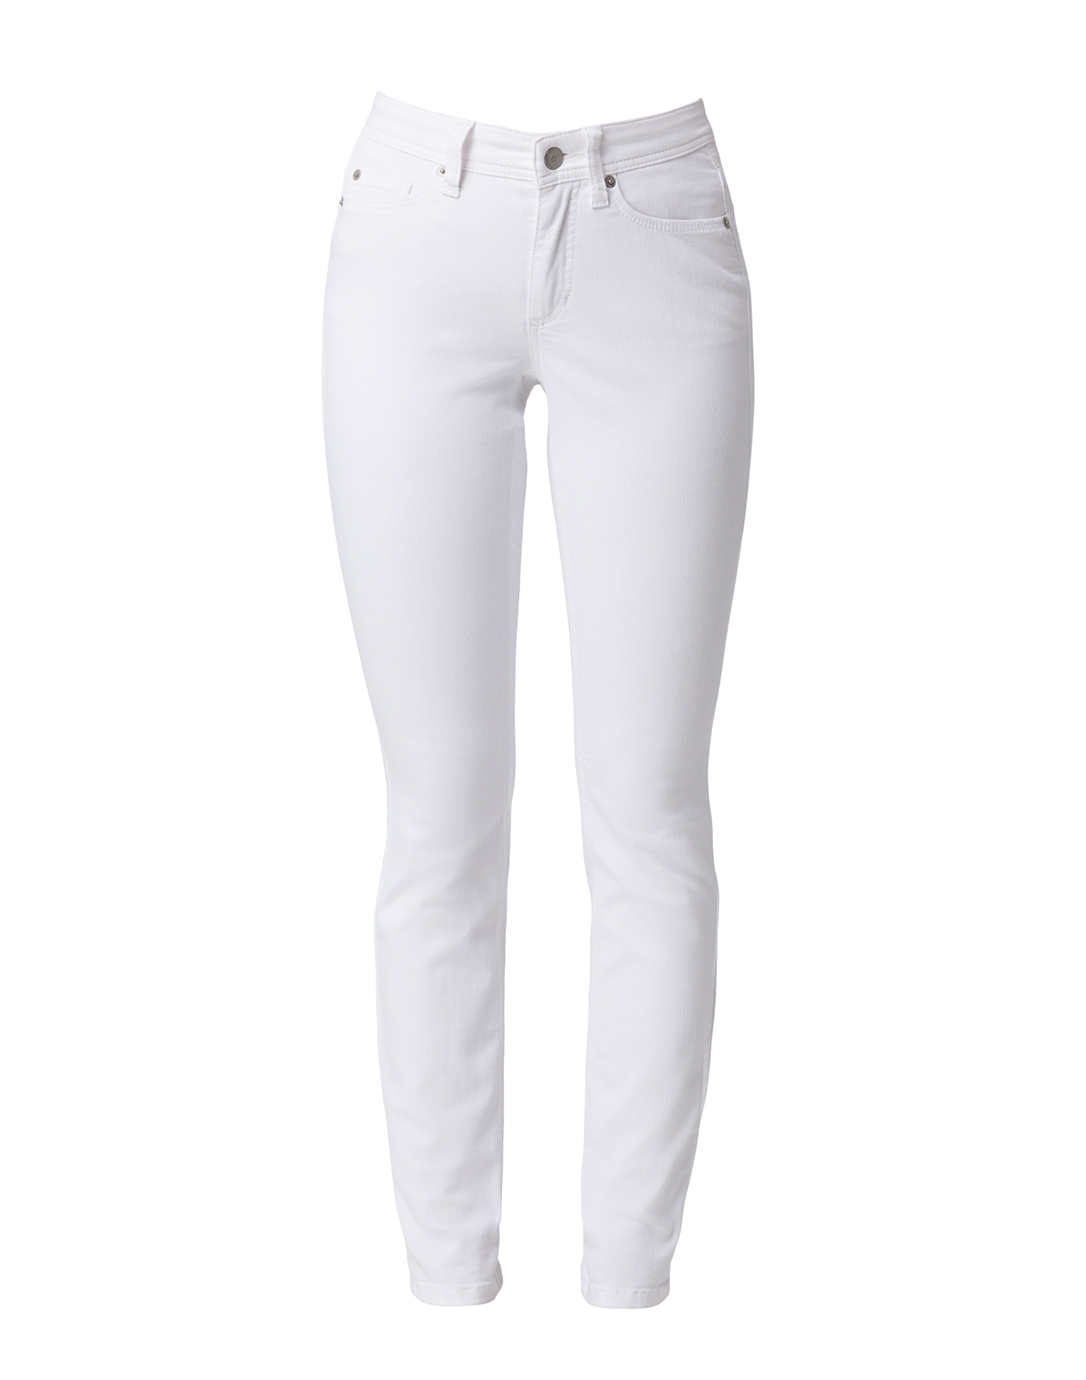 white stretch denim jeans